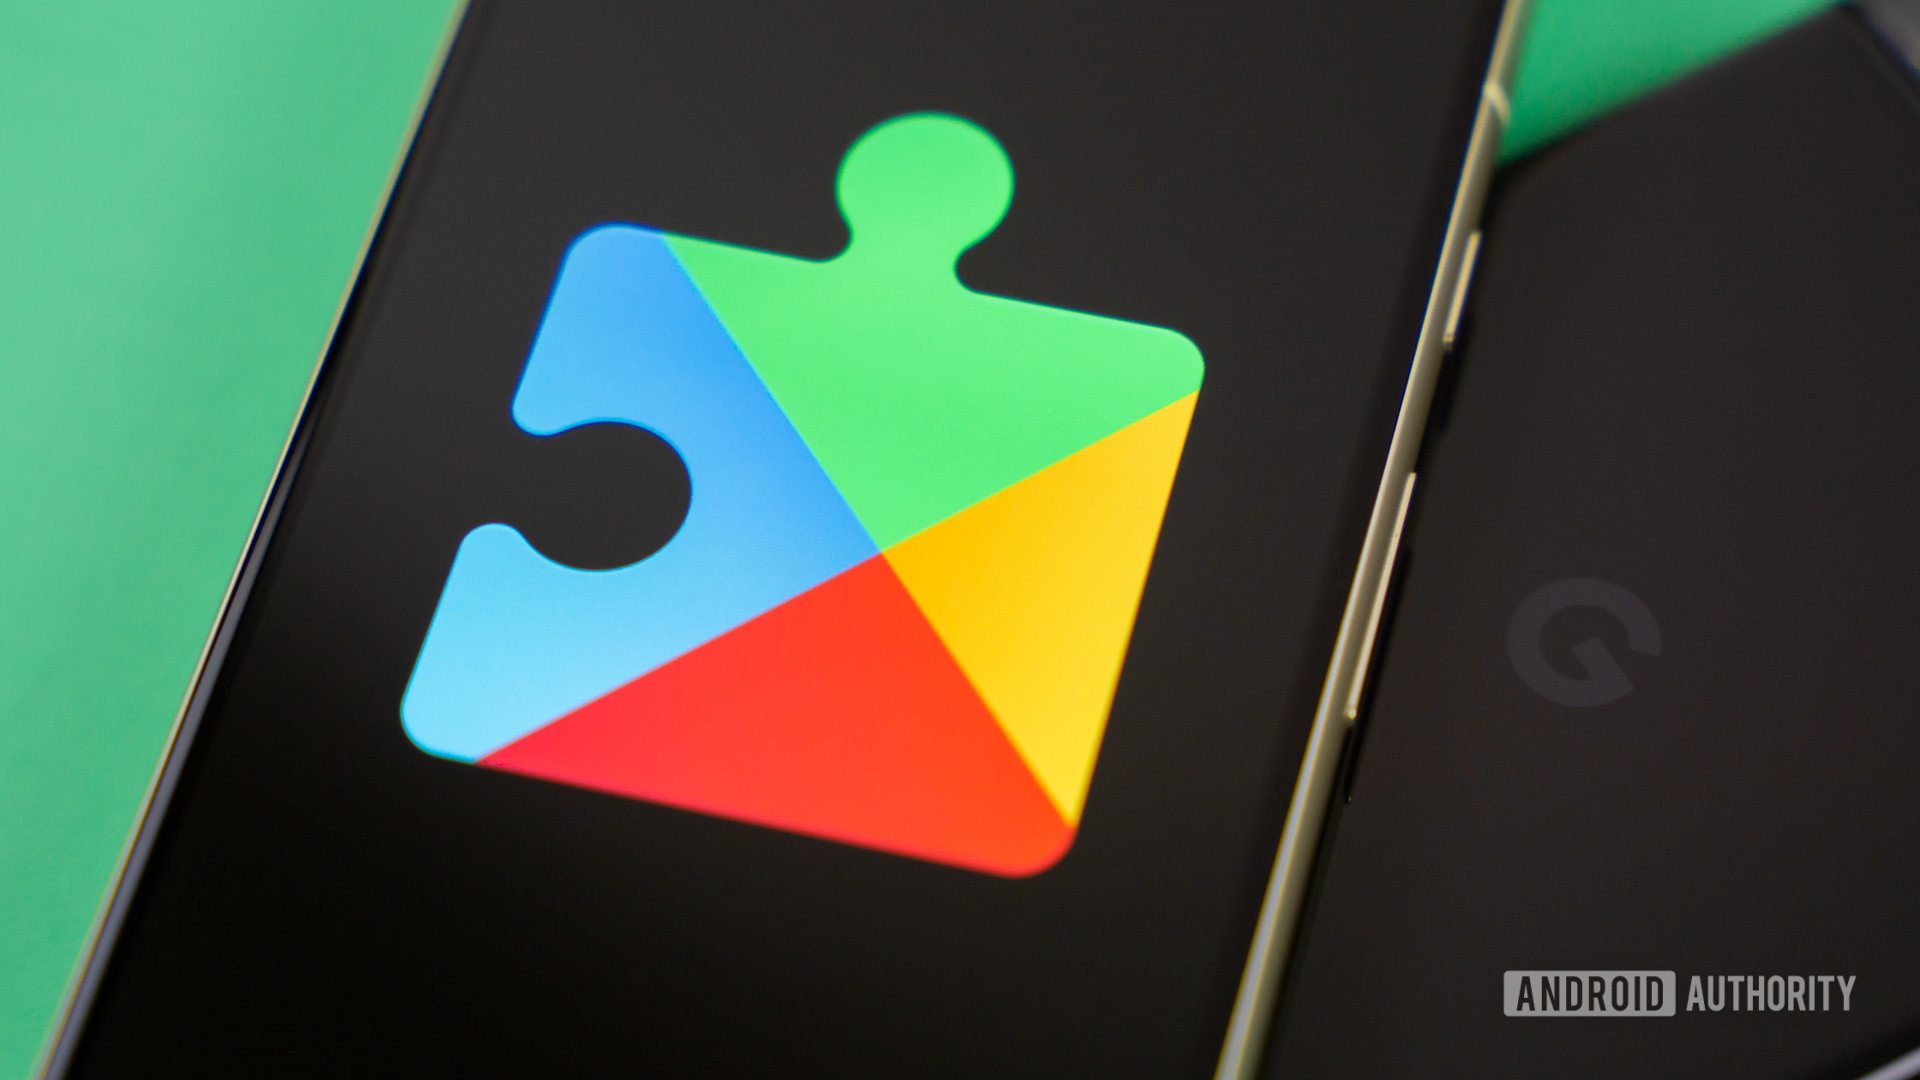 Google Play Services logo on smartphone Stock photo 4